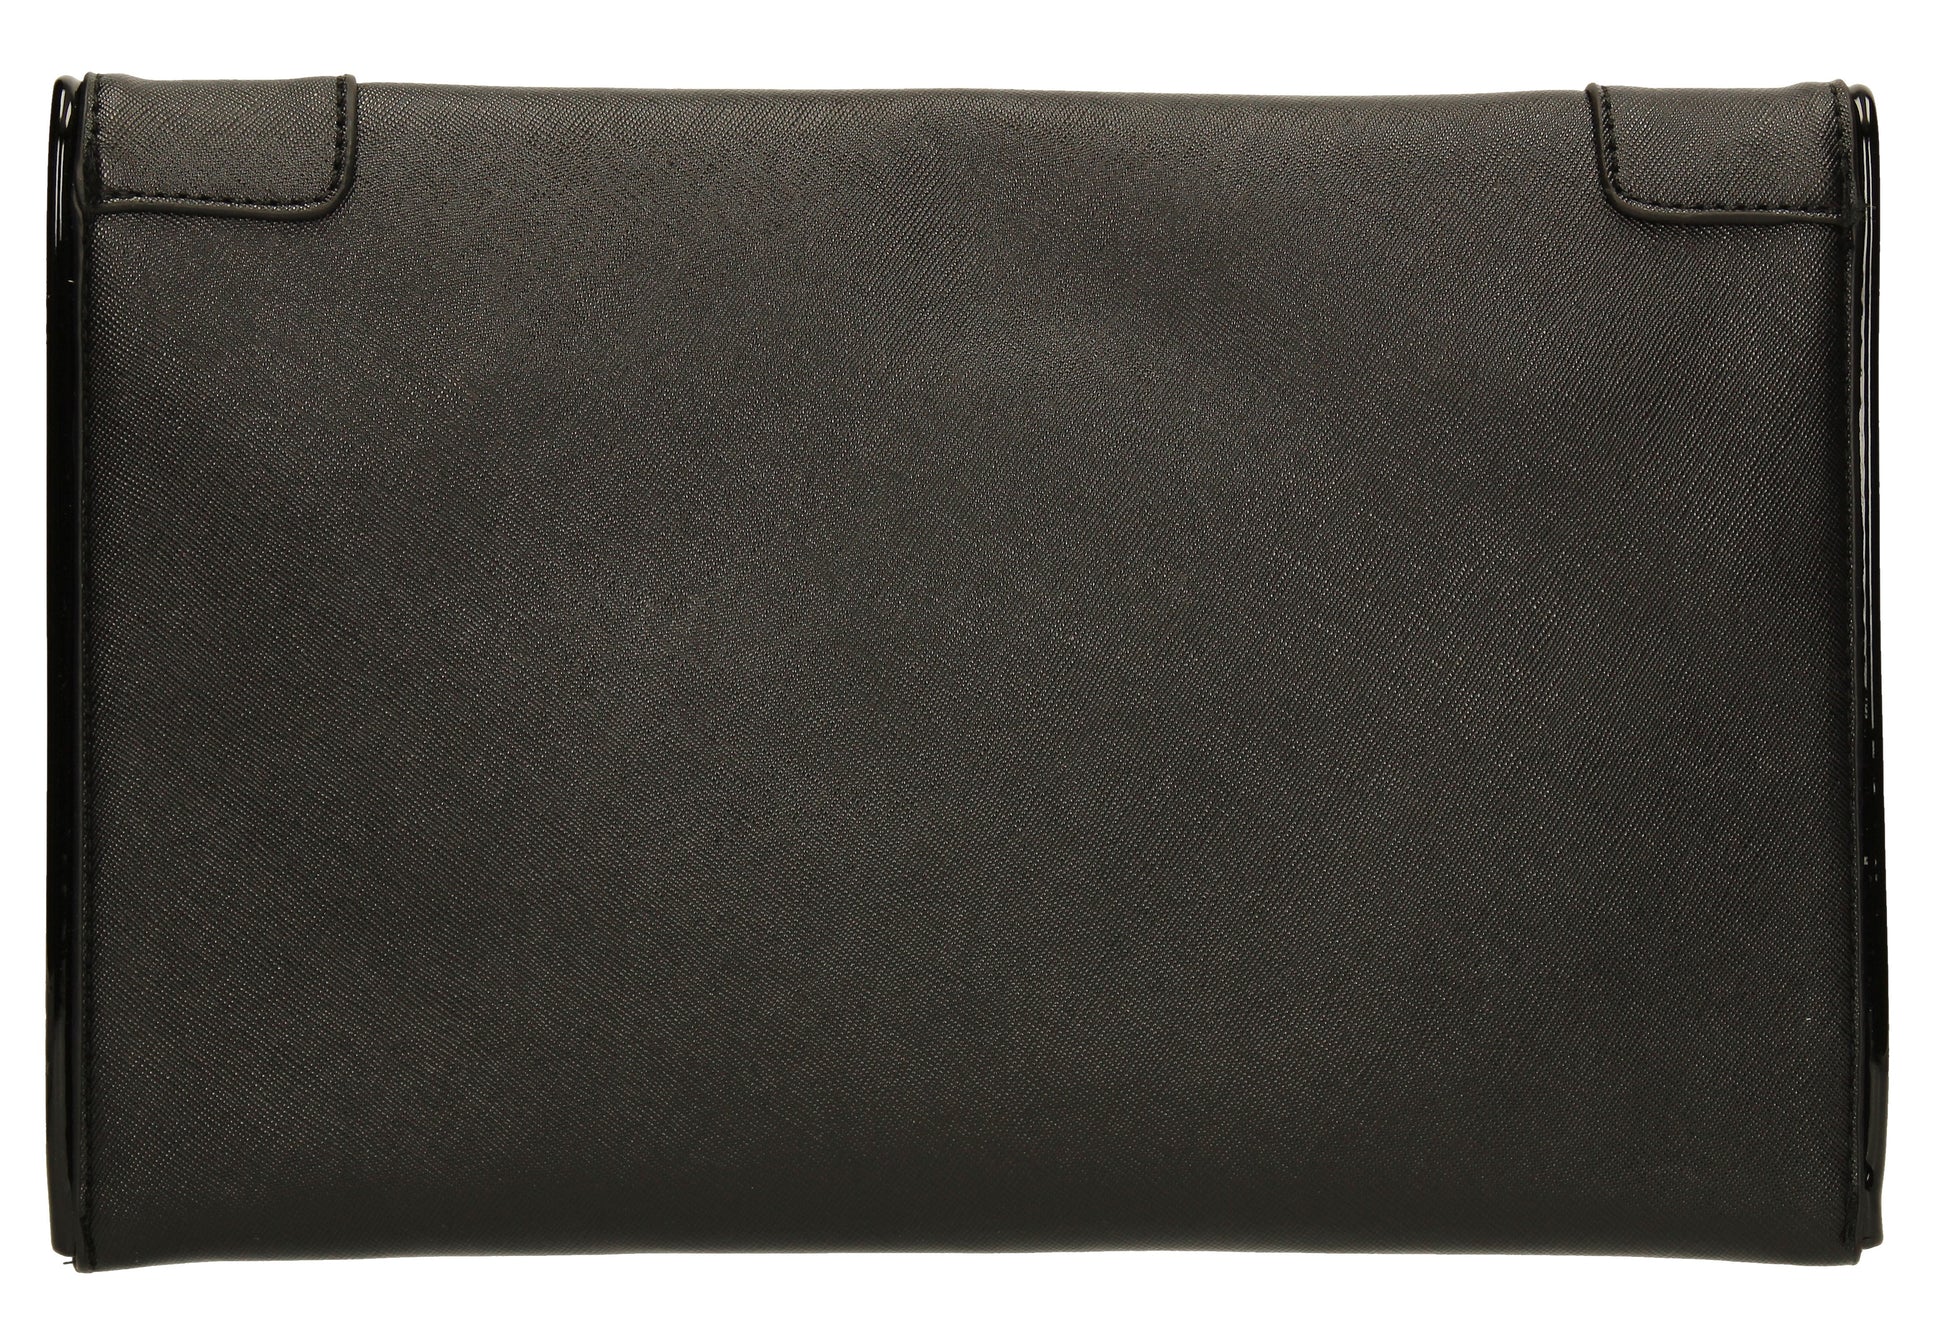 SWANKYSWANS Merlin Clutch Bag Black Cute Cheap Clutch Bag For Weddings School and Work